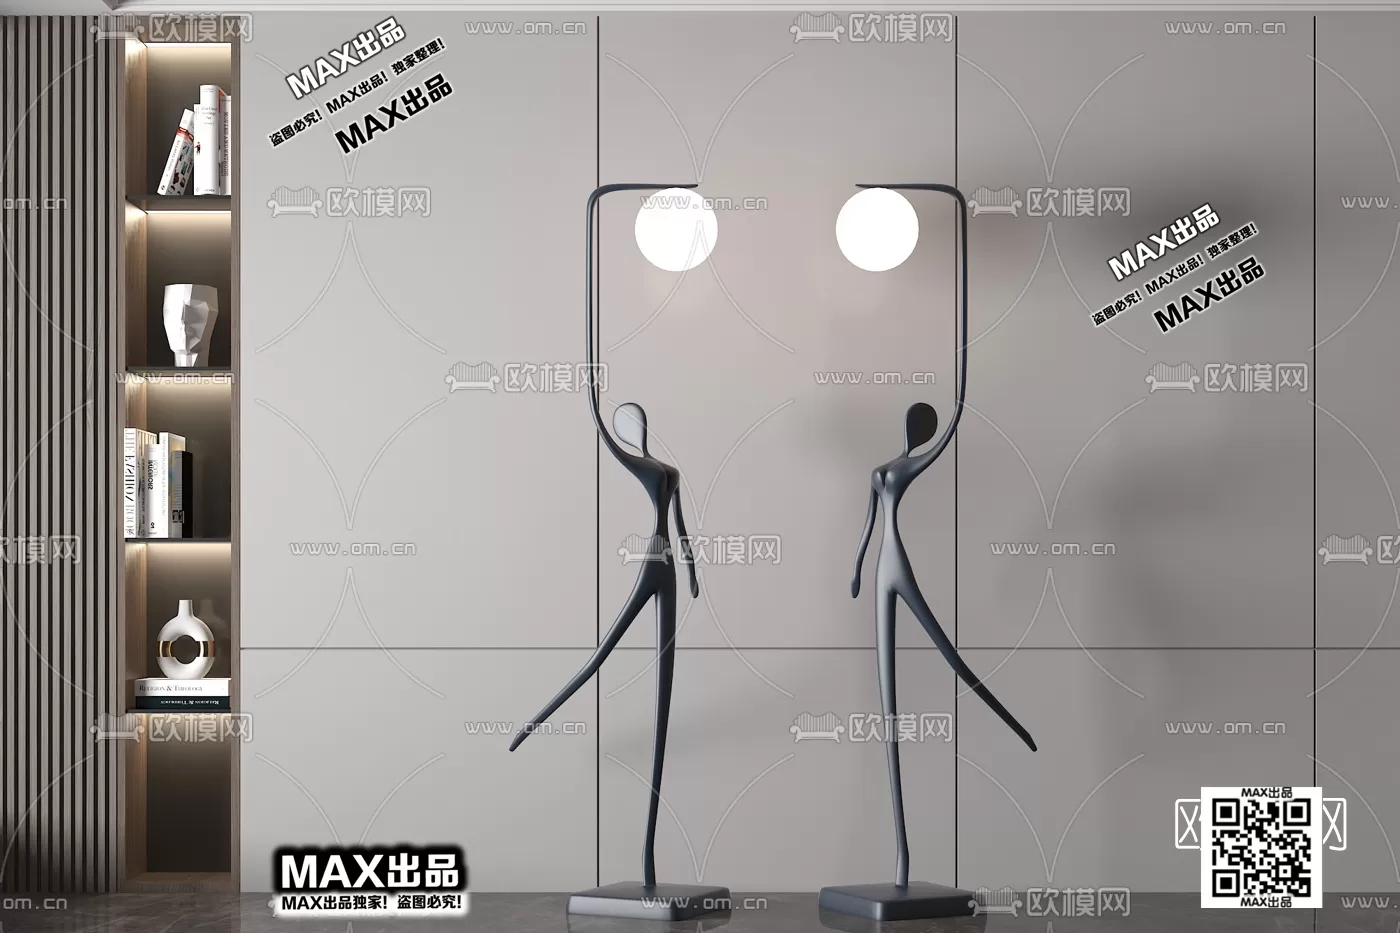 DECORATION 3D MODELS – 3DS MAX – 056